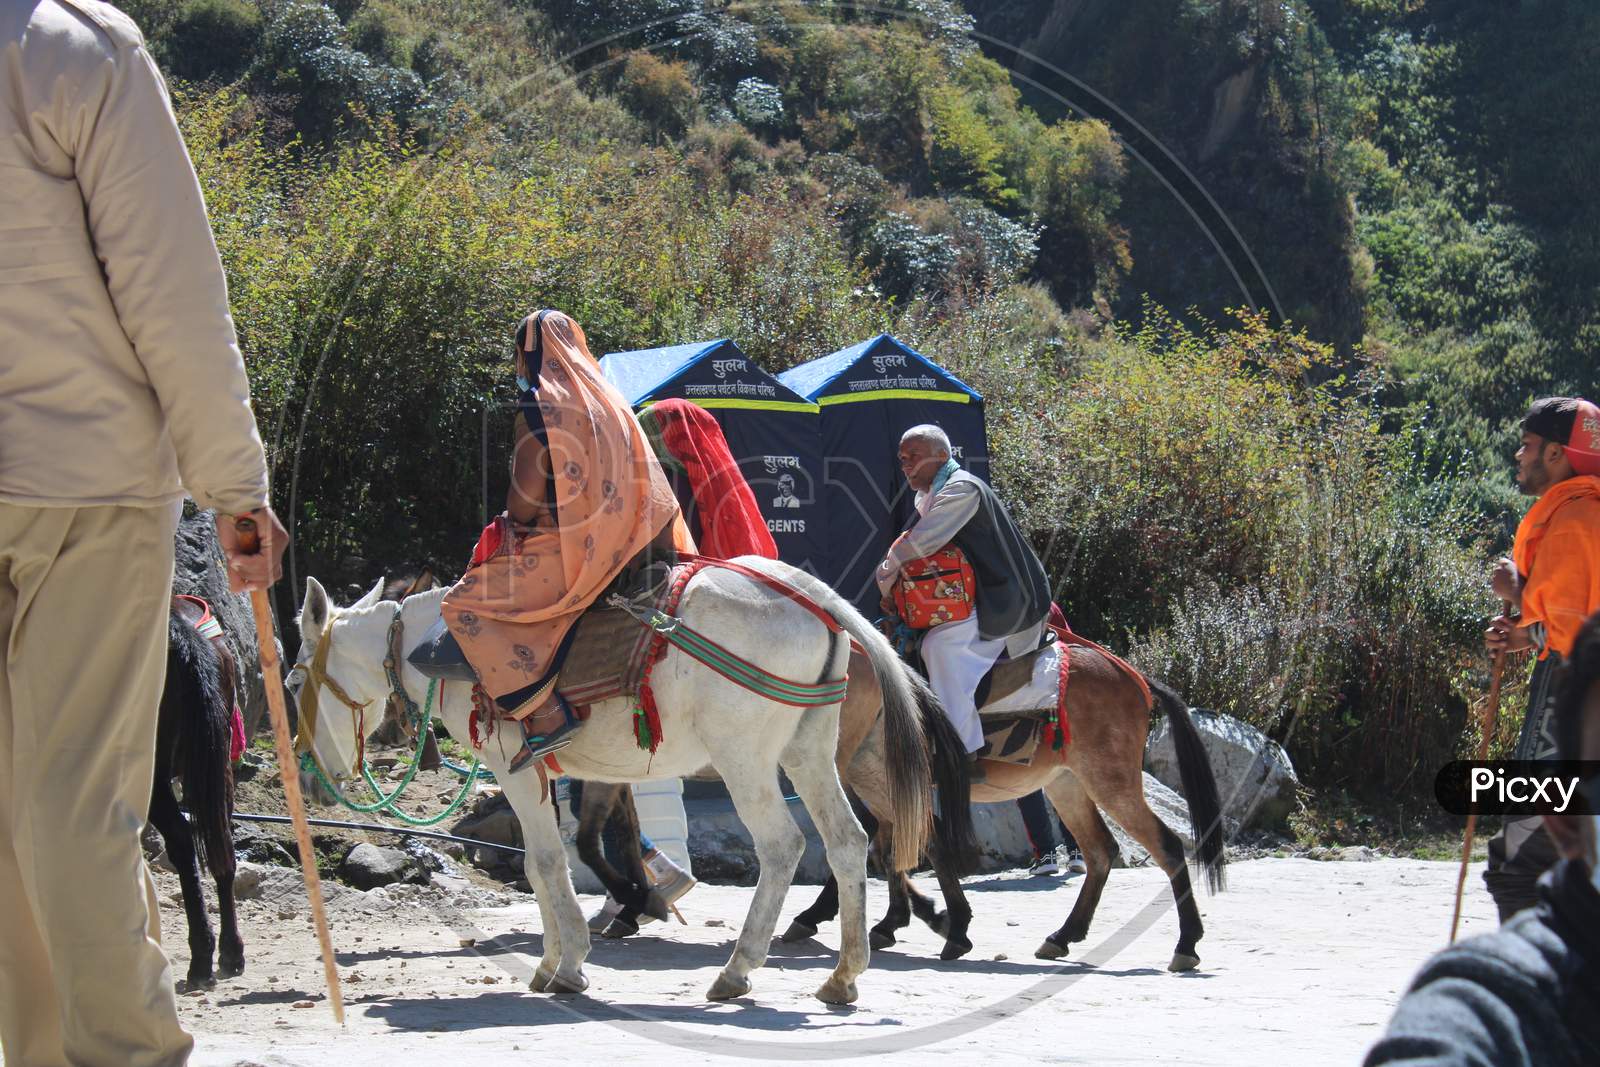 Devotees traveling to Kedarnath